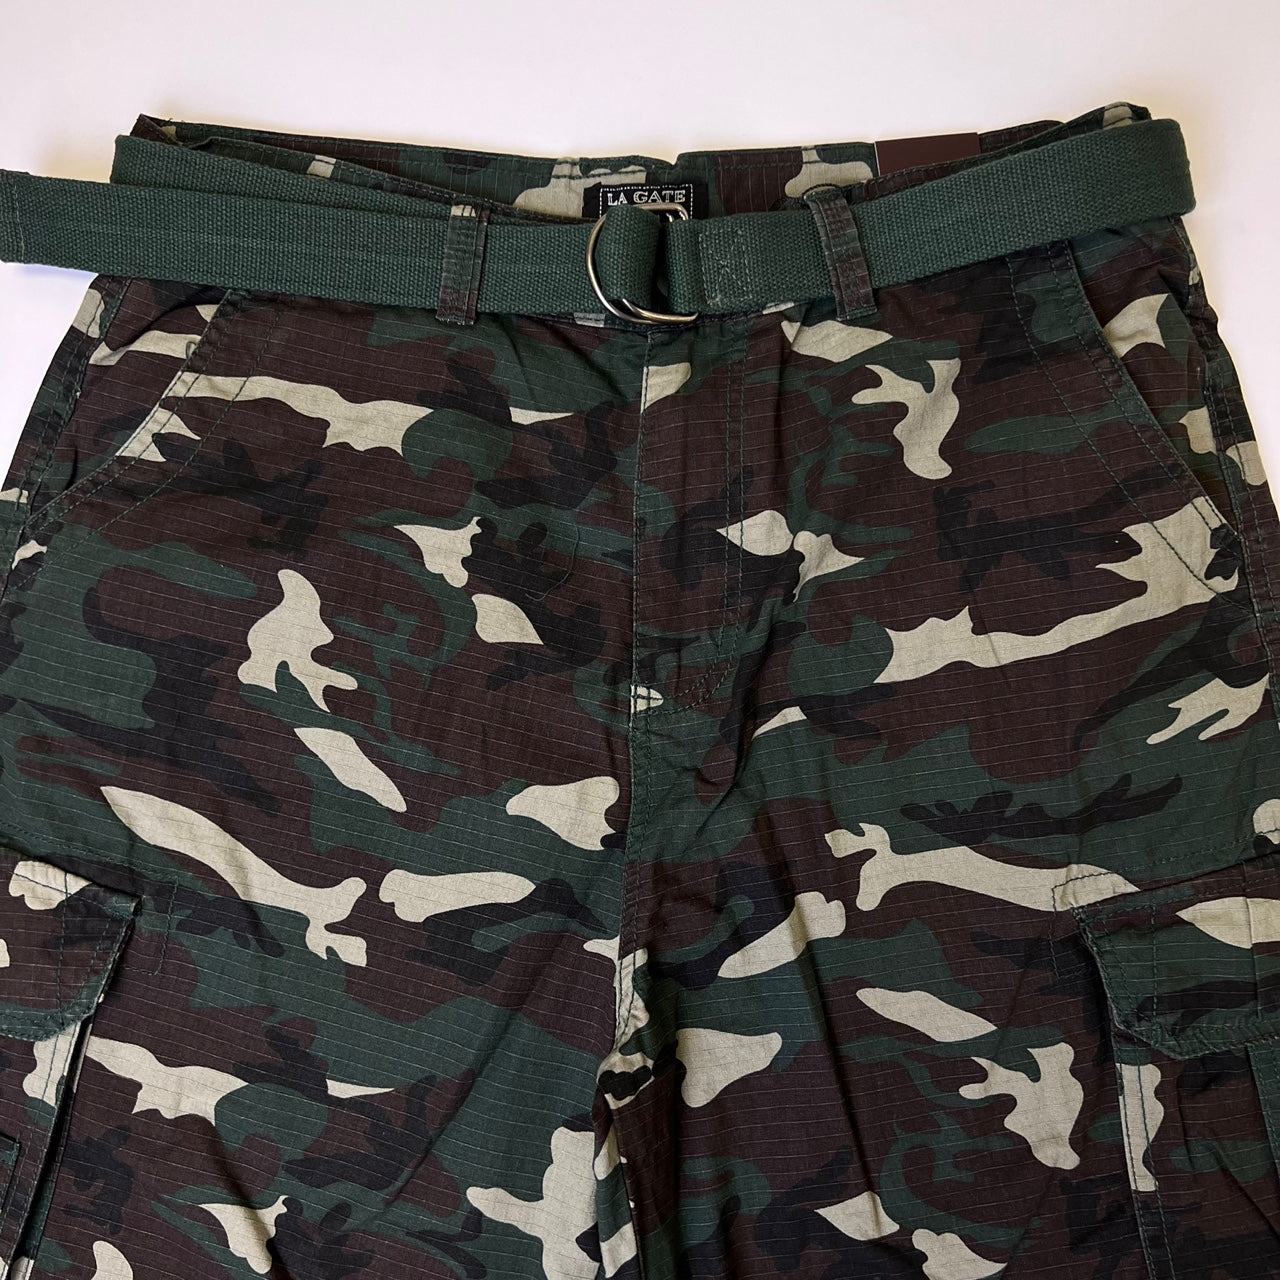 Camo Green Military Cargo Shorts with Pockets